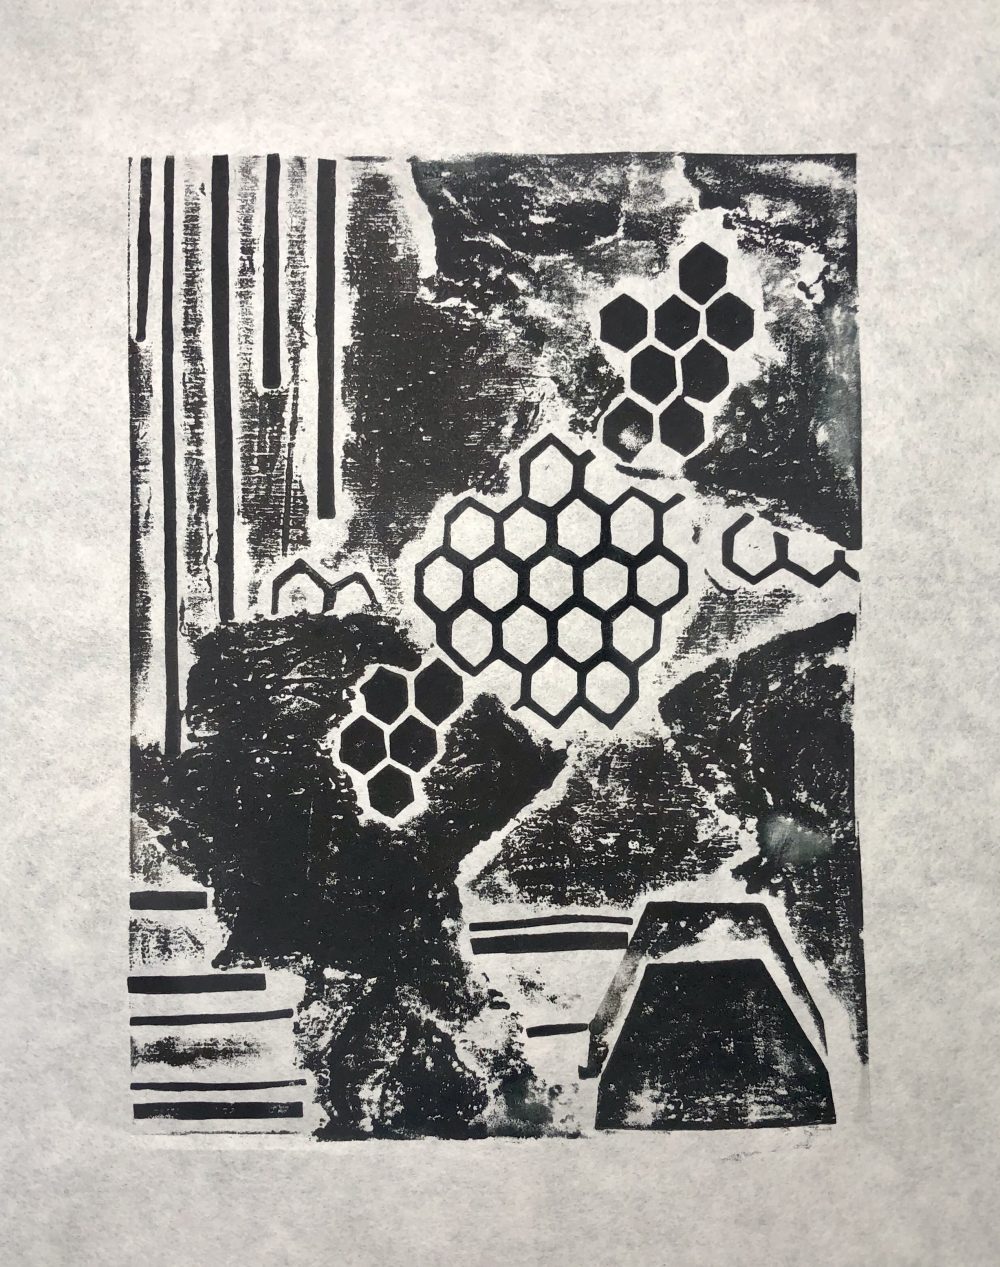 Print of honeycomb hive in organic underground cave.